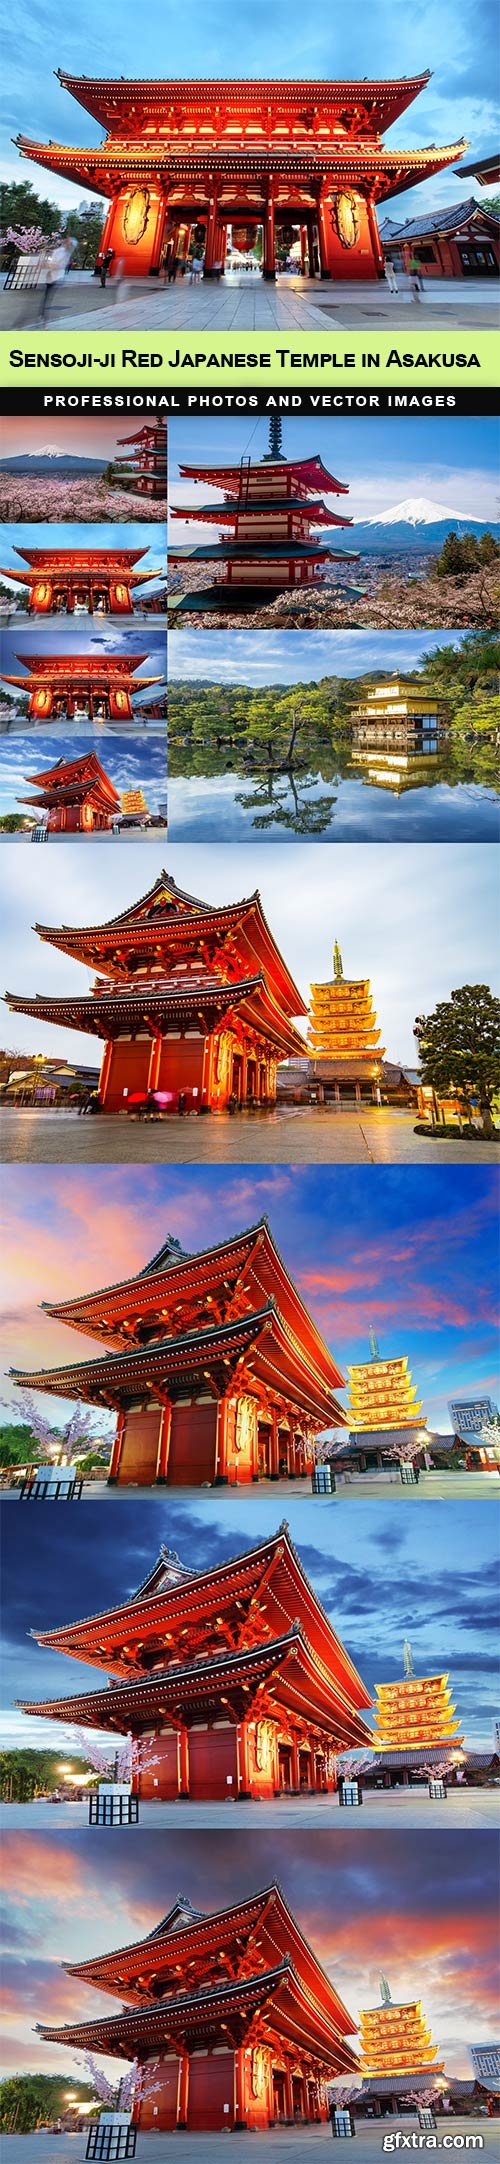 Sensoji-ji Red Japanese Temple in Asakusa - 10 UHQ JPEG